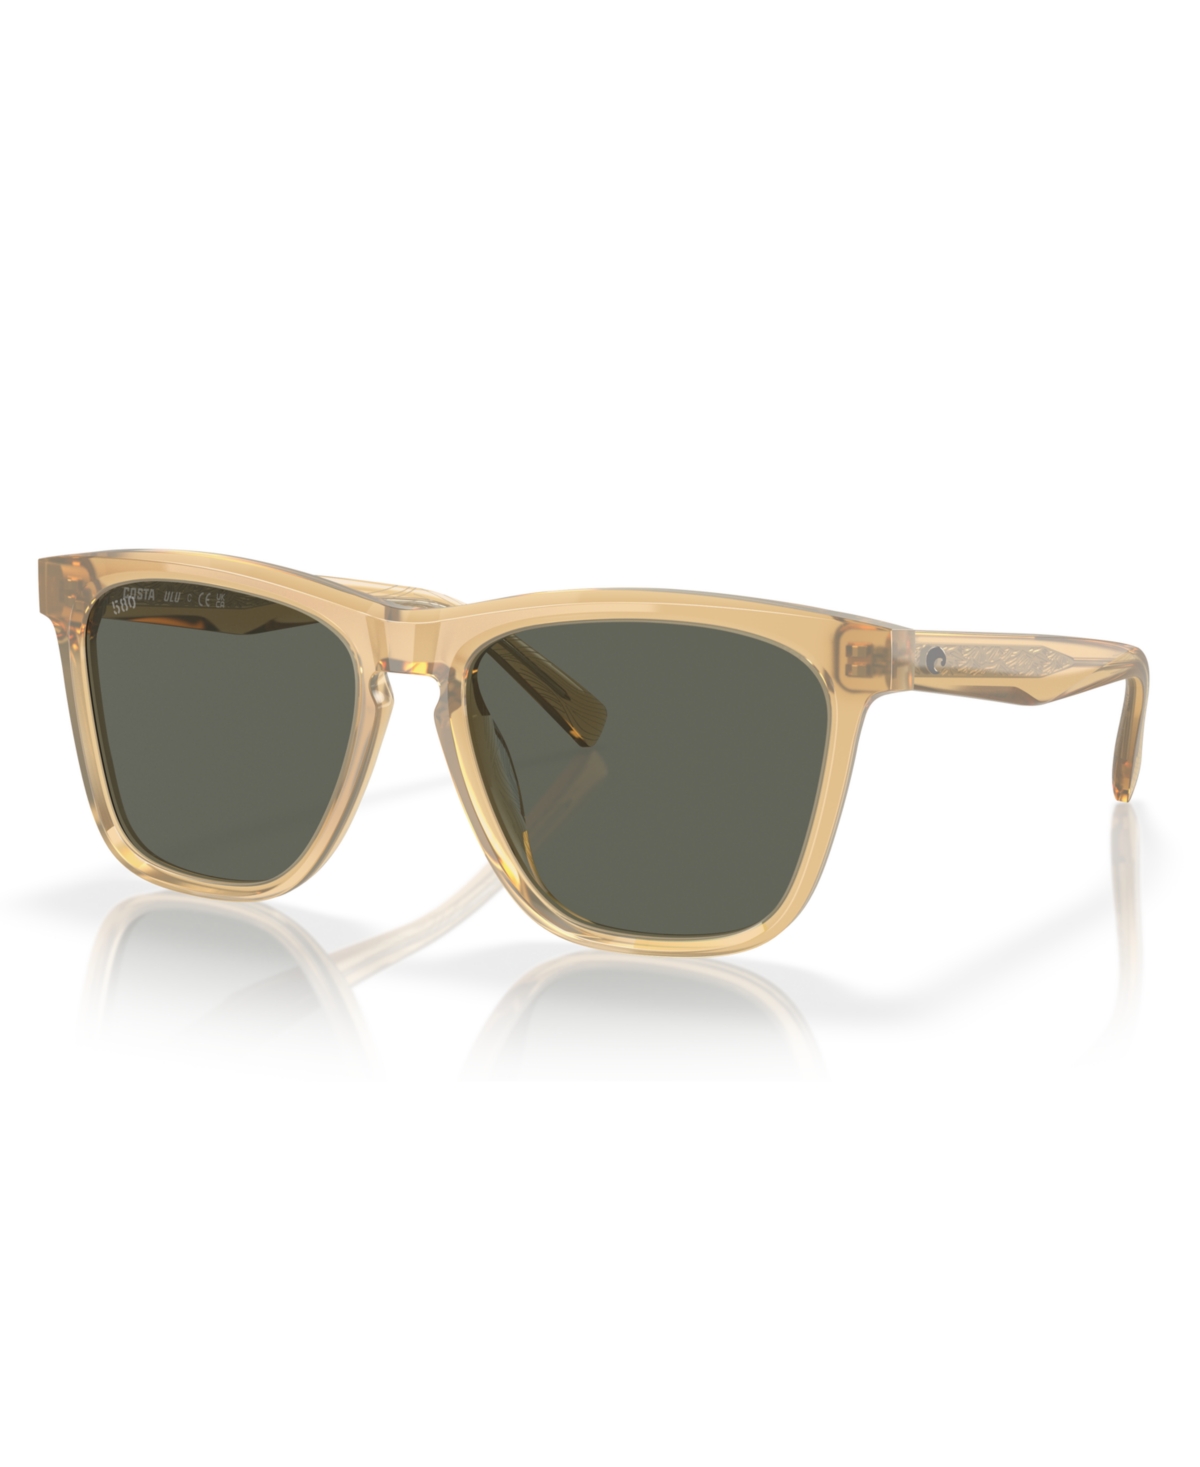 Costa Del Mar Men's Polarized Sunglasses, Keramas 6s2015 In Tortoise